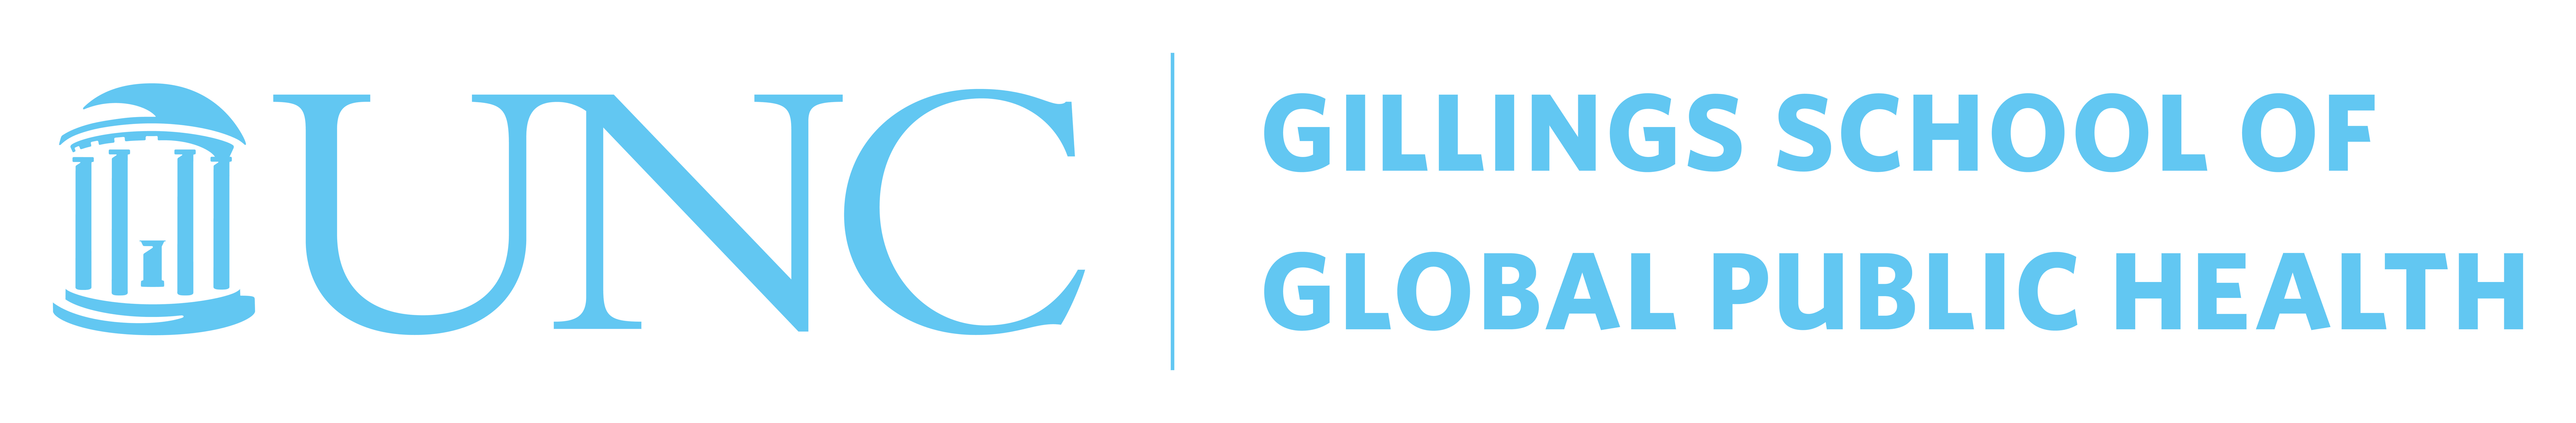 UNC Logo - Gillings School of Global Public Health Logos • UNC Gillings School ...